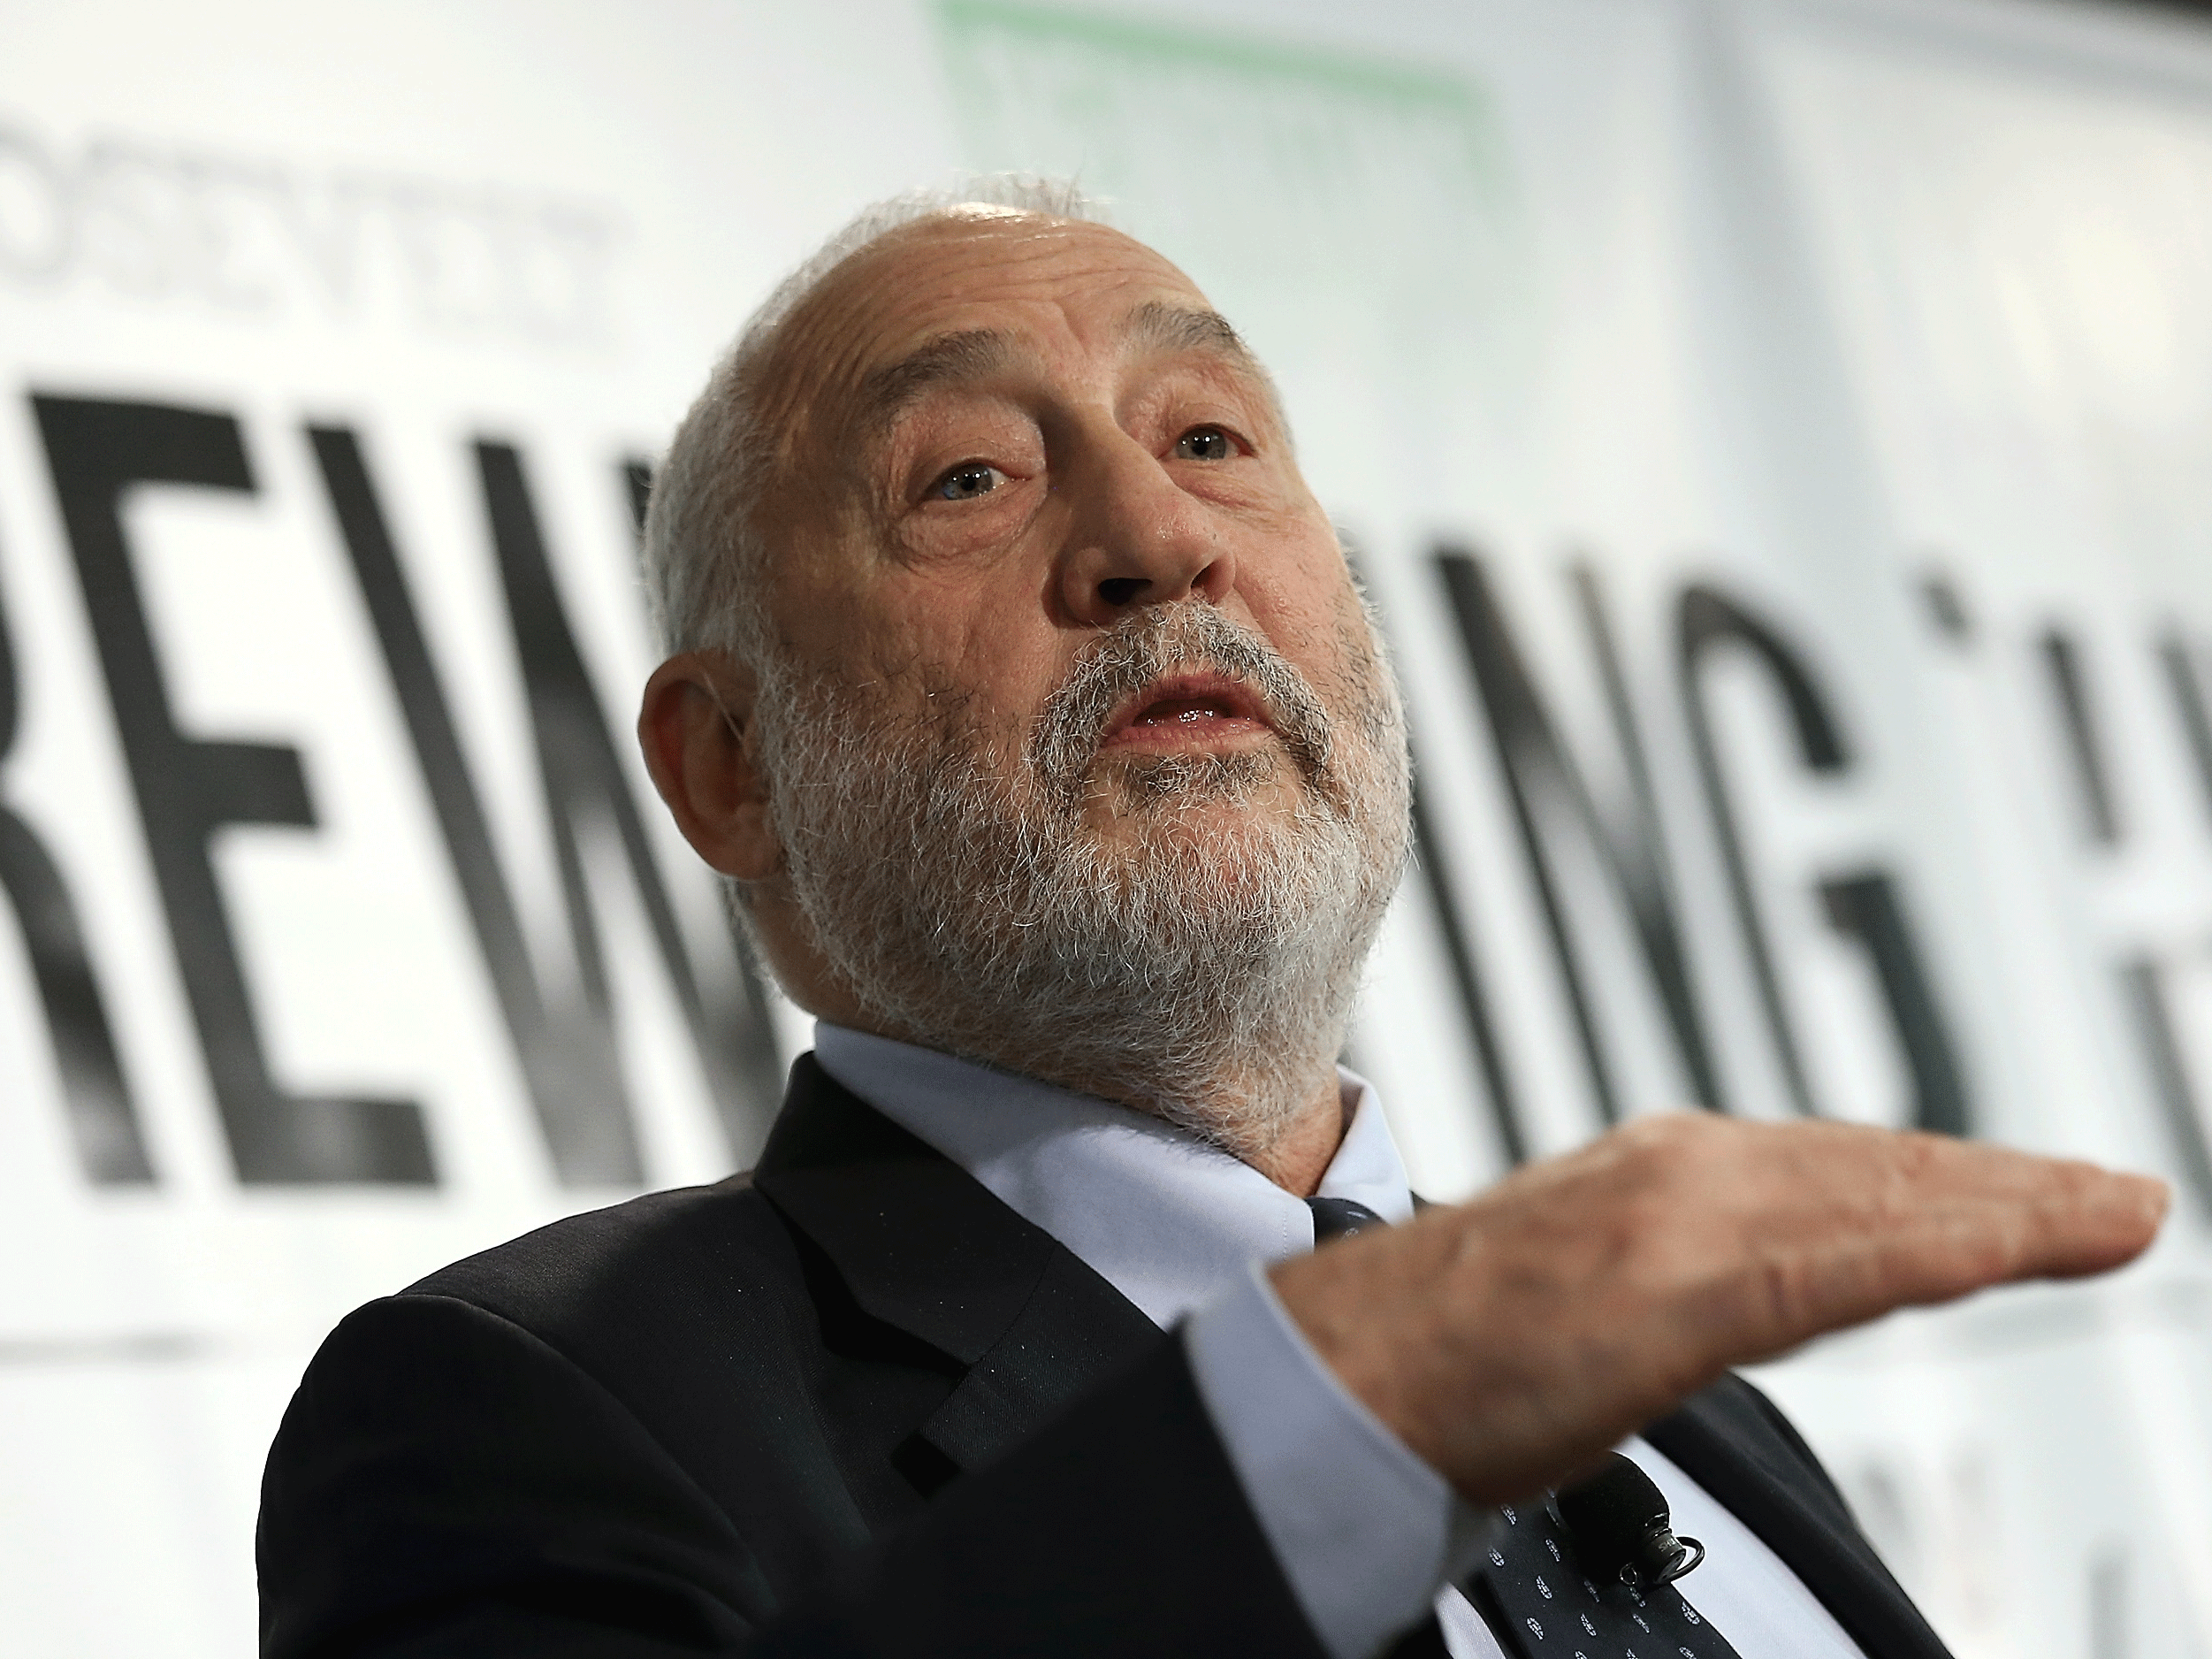 Joseph Stiglitz spoke out on post-Brexit trade